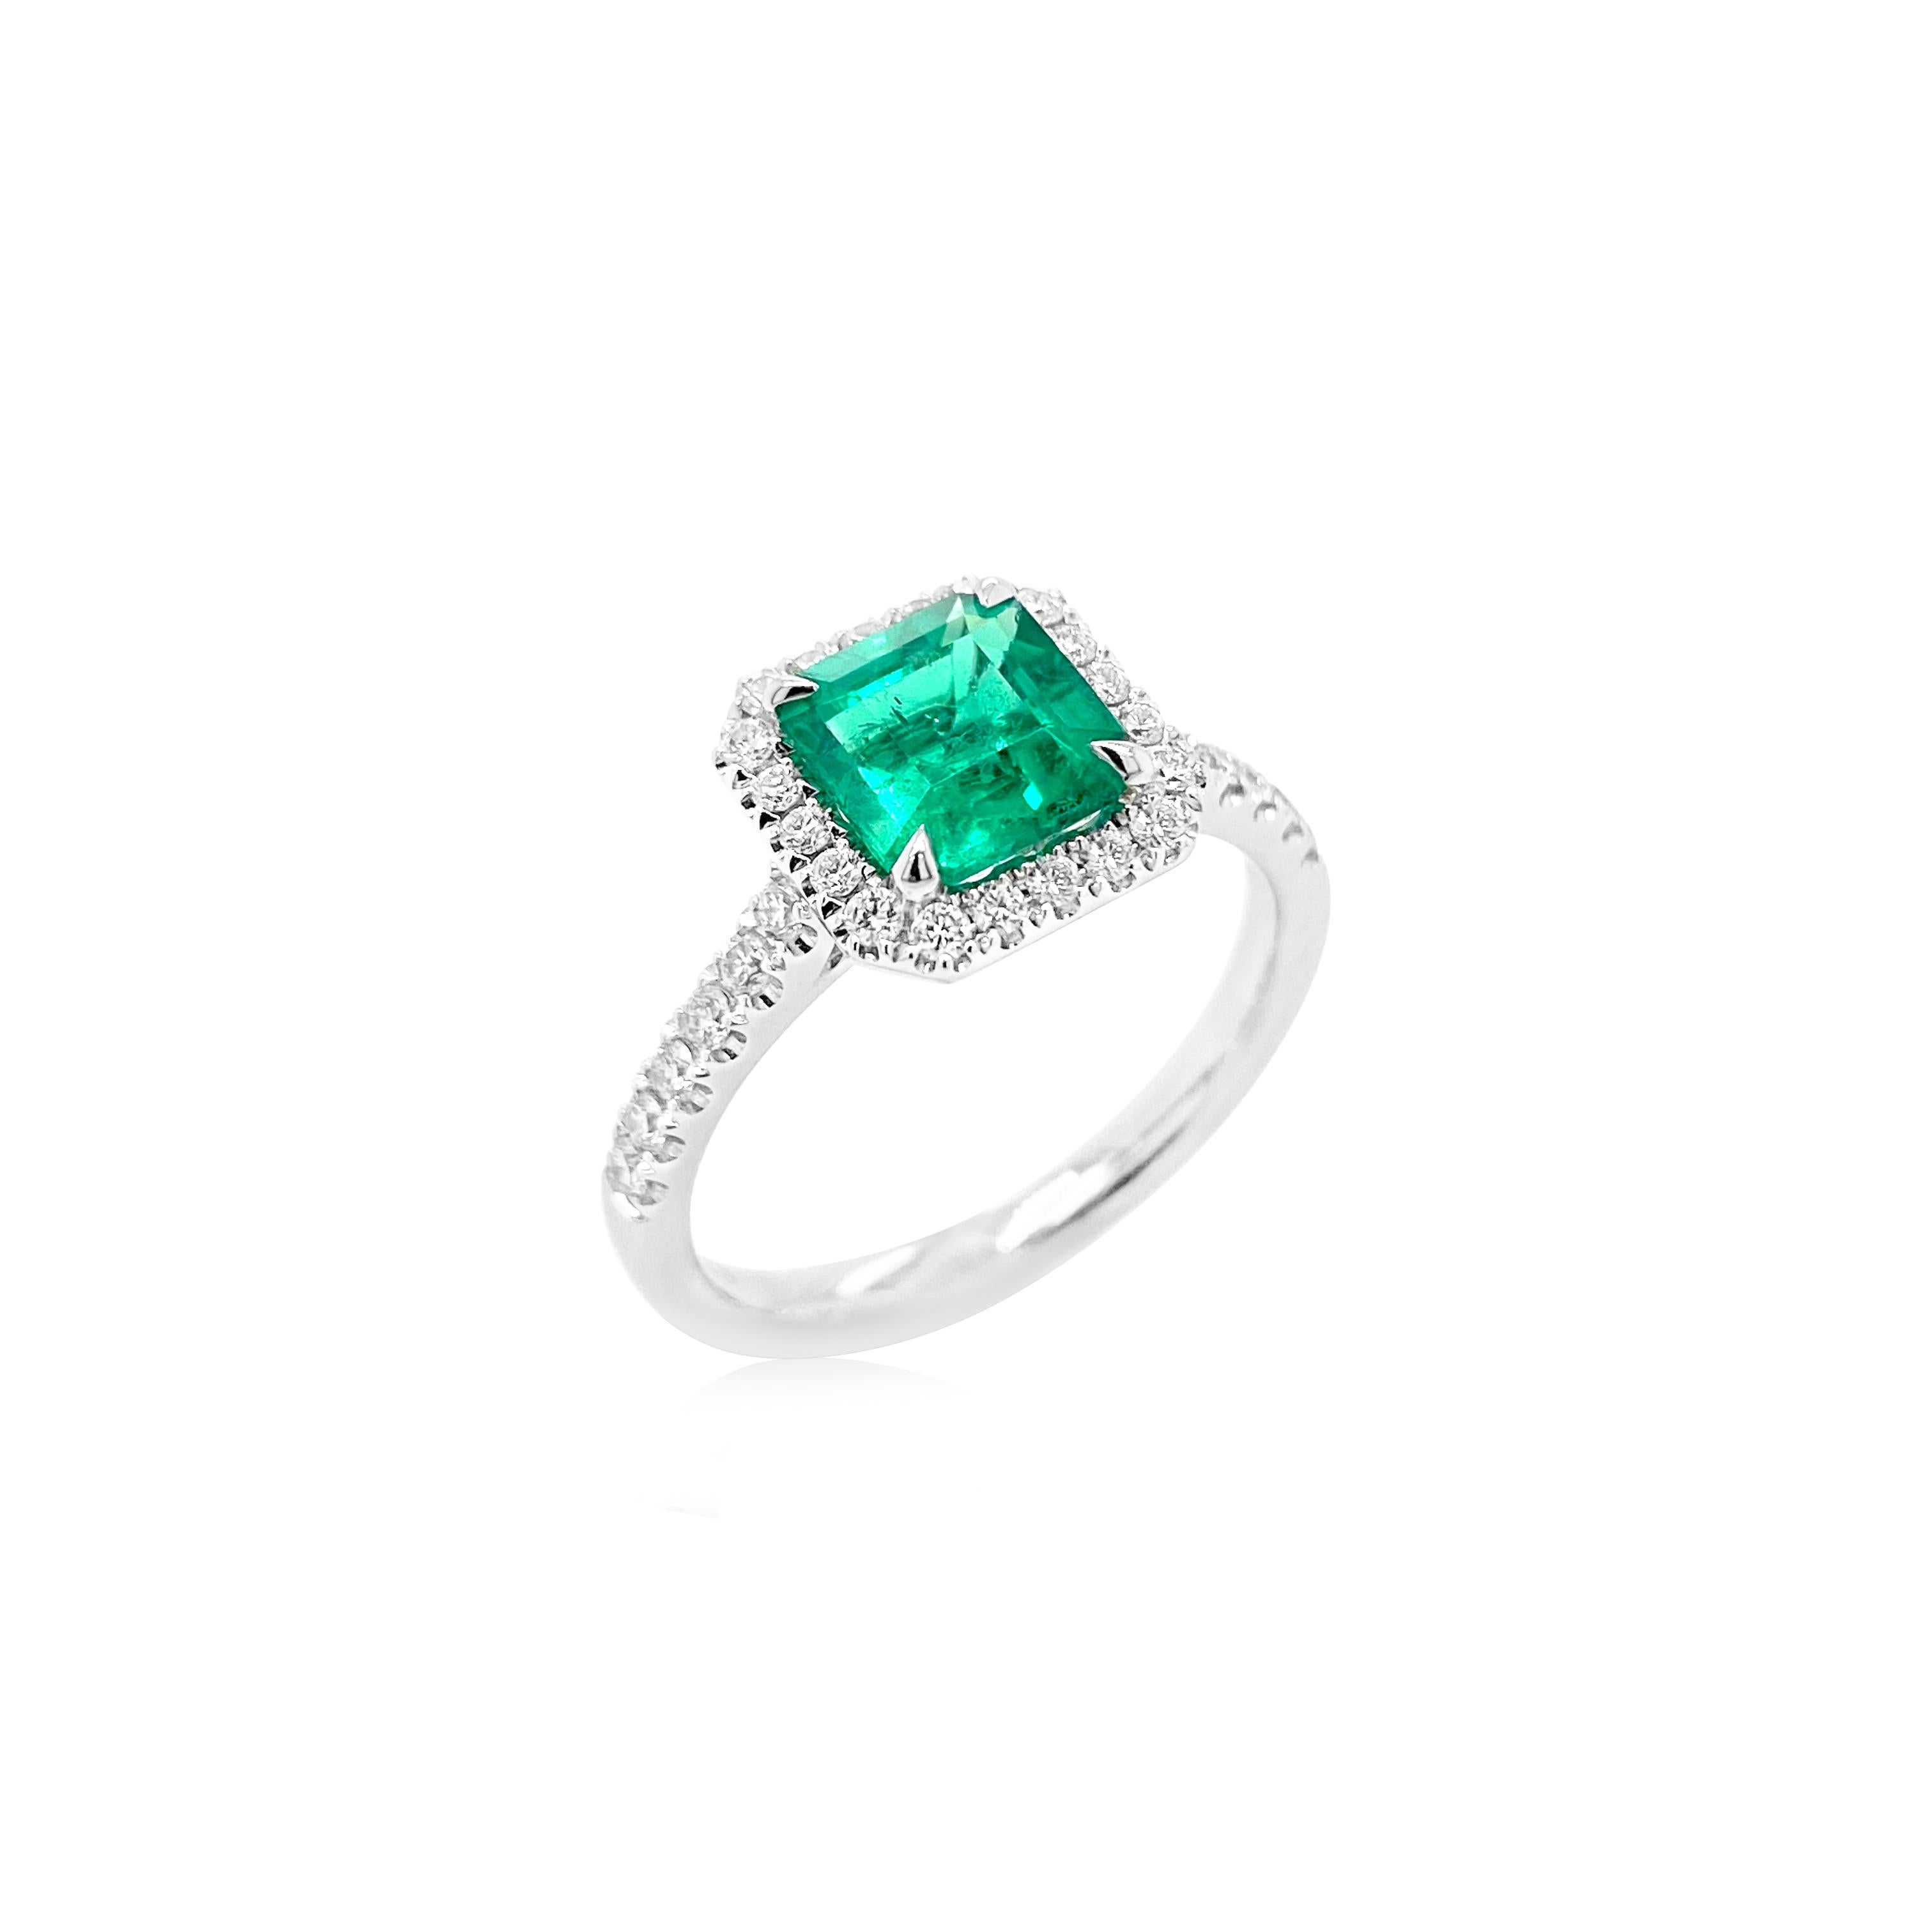 Emerald Cut Vivid Green Colombian Emerald Ring set in White diamonds For Sale